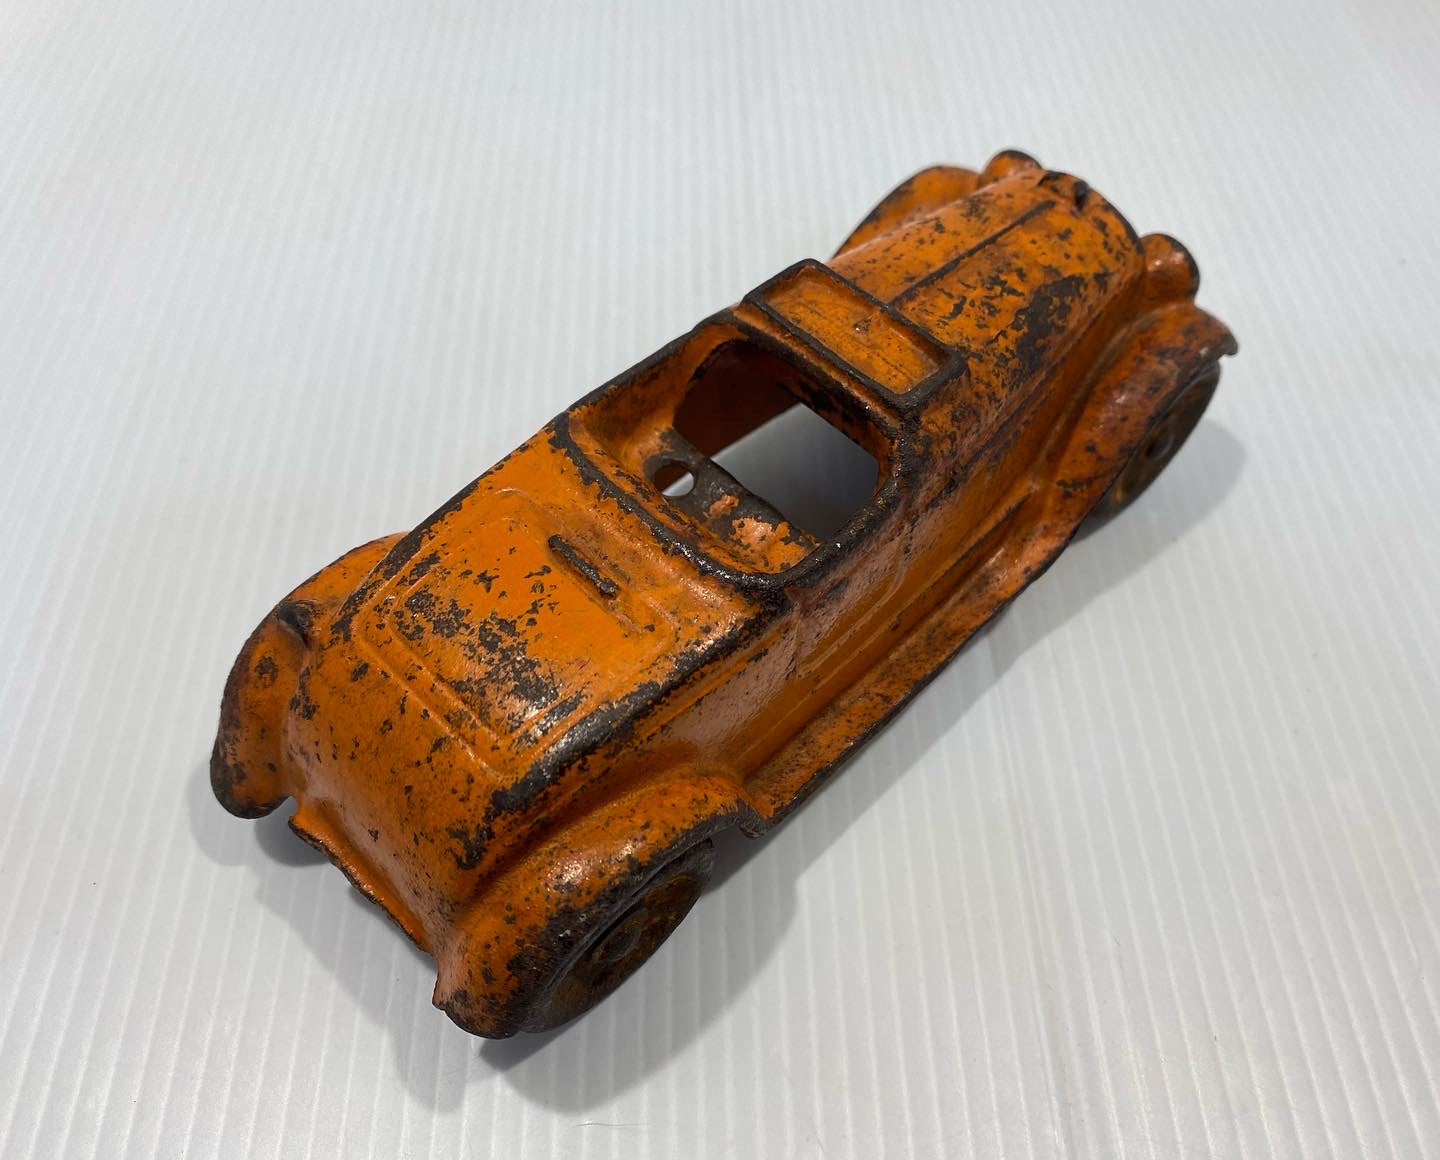 Antique 1930s Kilgore Cast Iron Orange Roadster